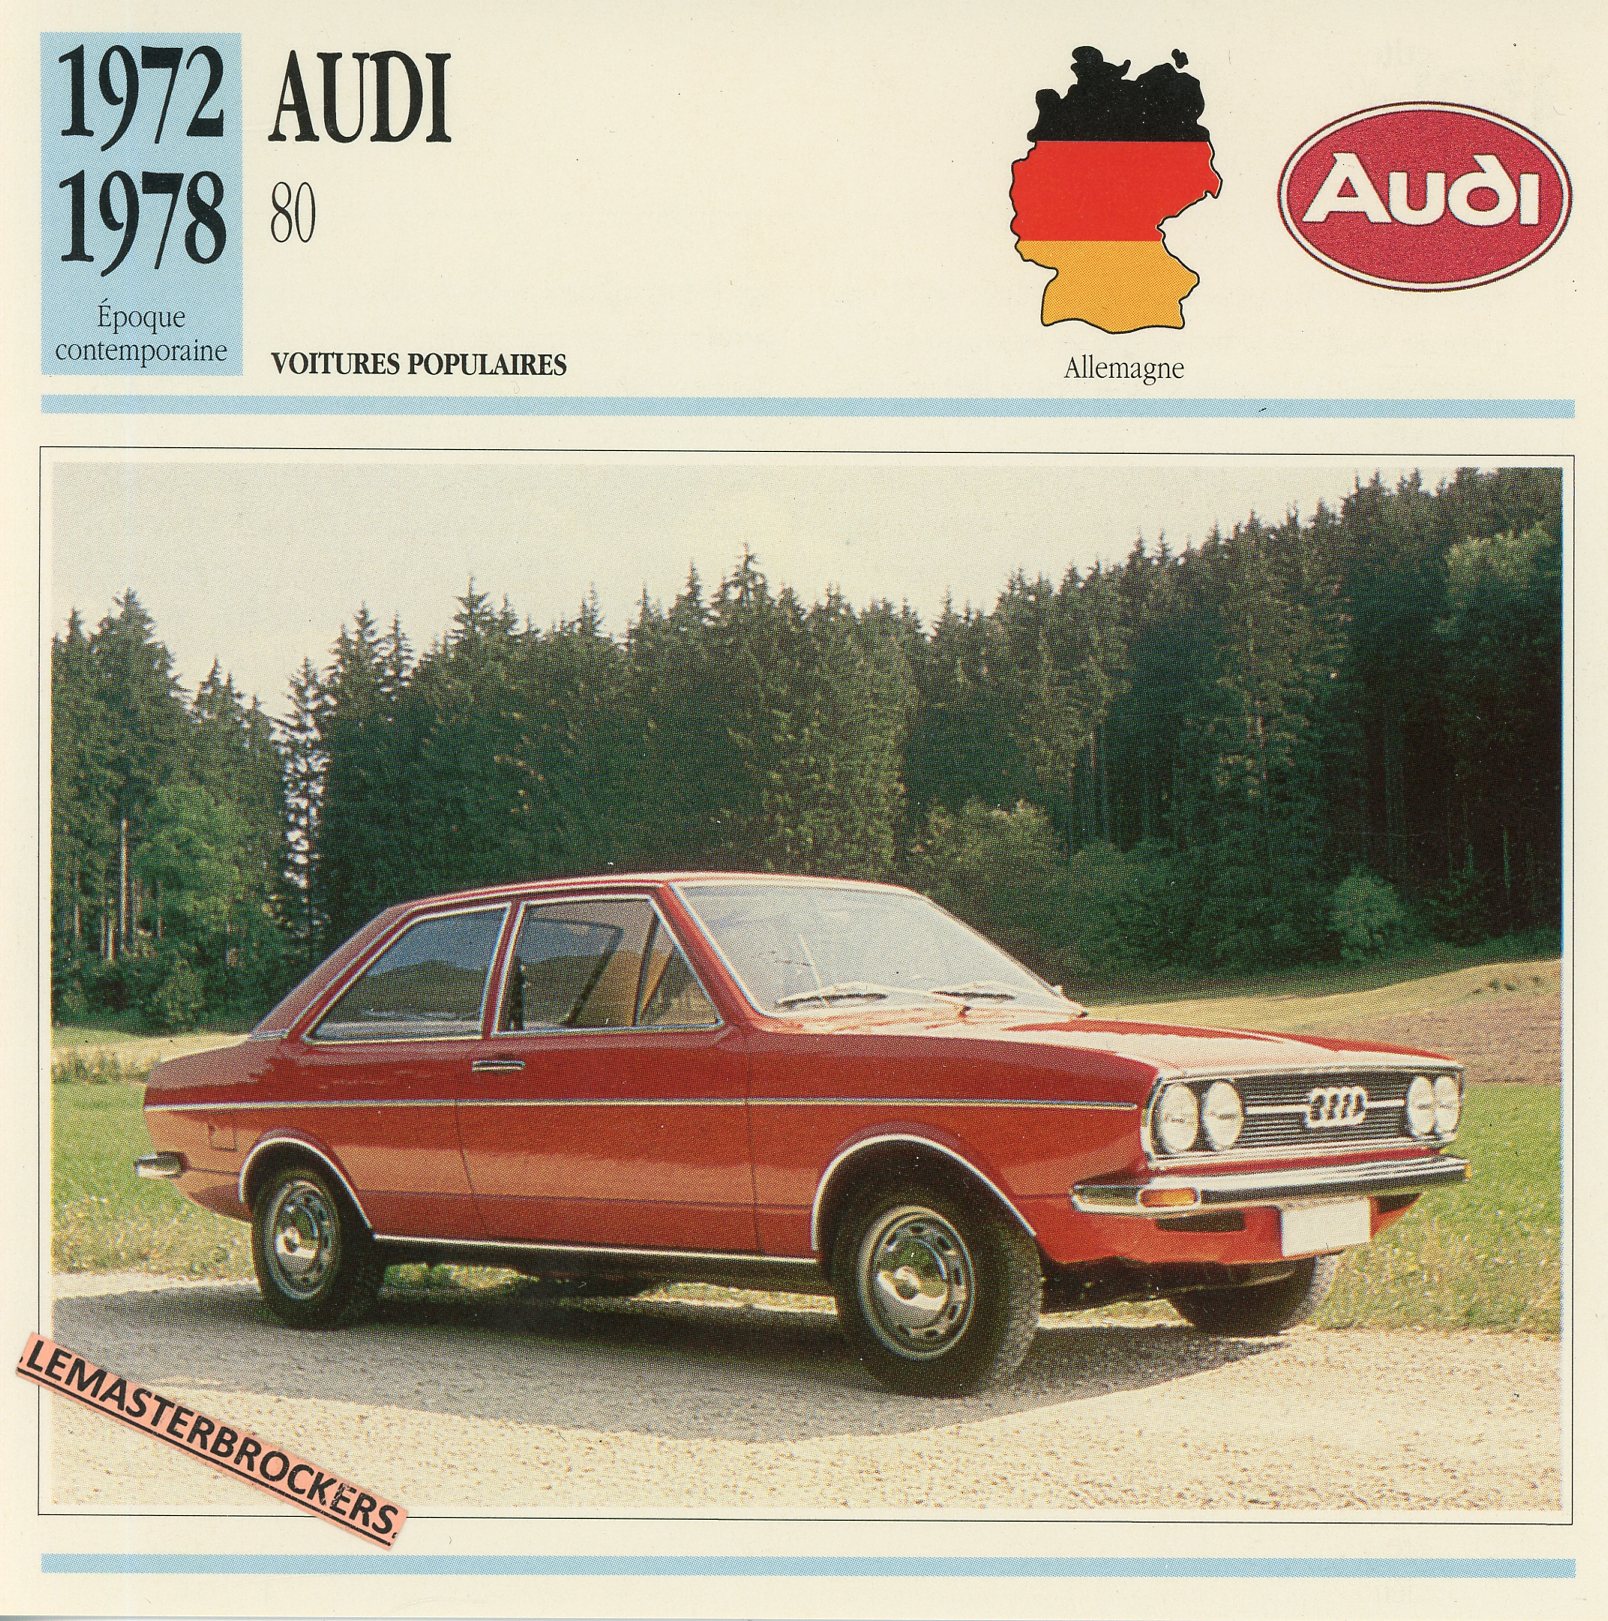 FICHE-AUDI-80-1972-1978-LEMASTERBROCKERS-FICHE-AUTO-CARS-CARD-ATLAS-FRENCH